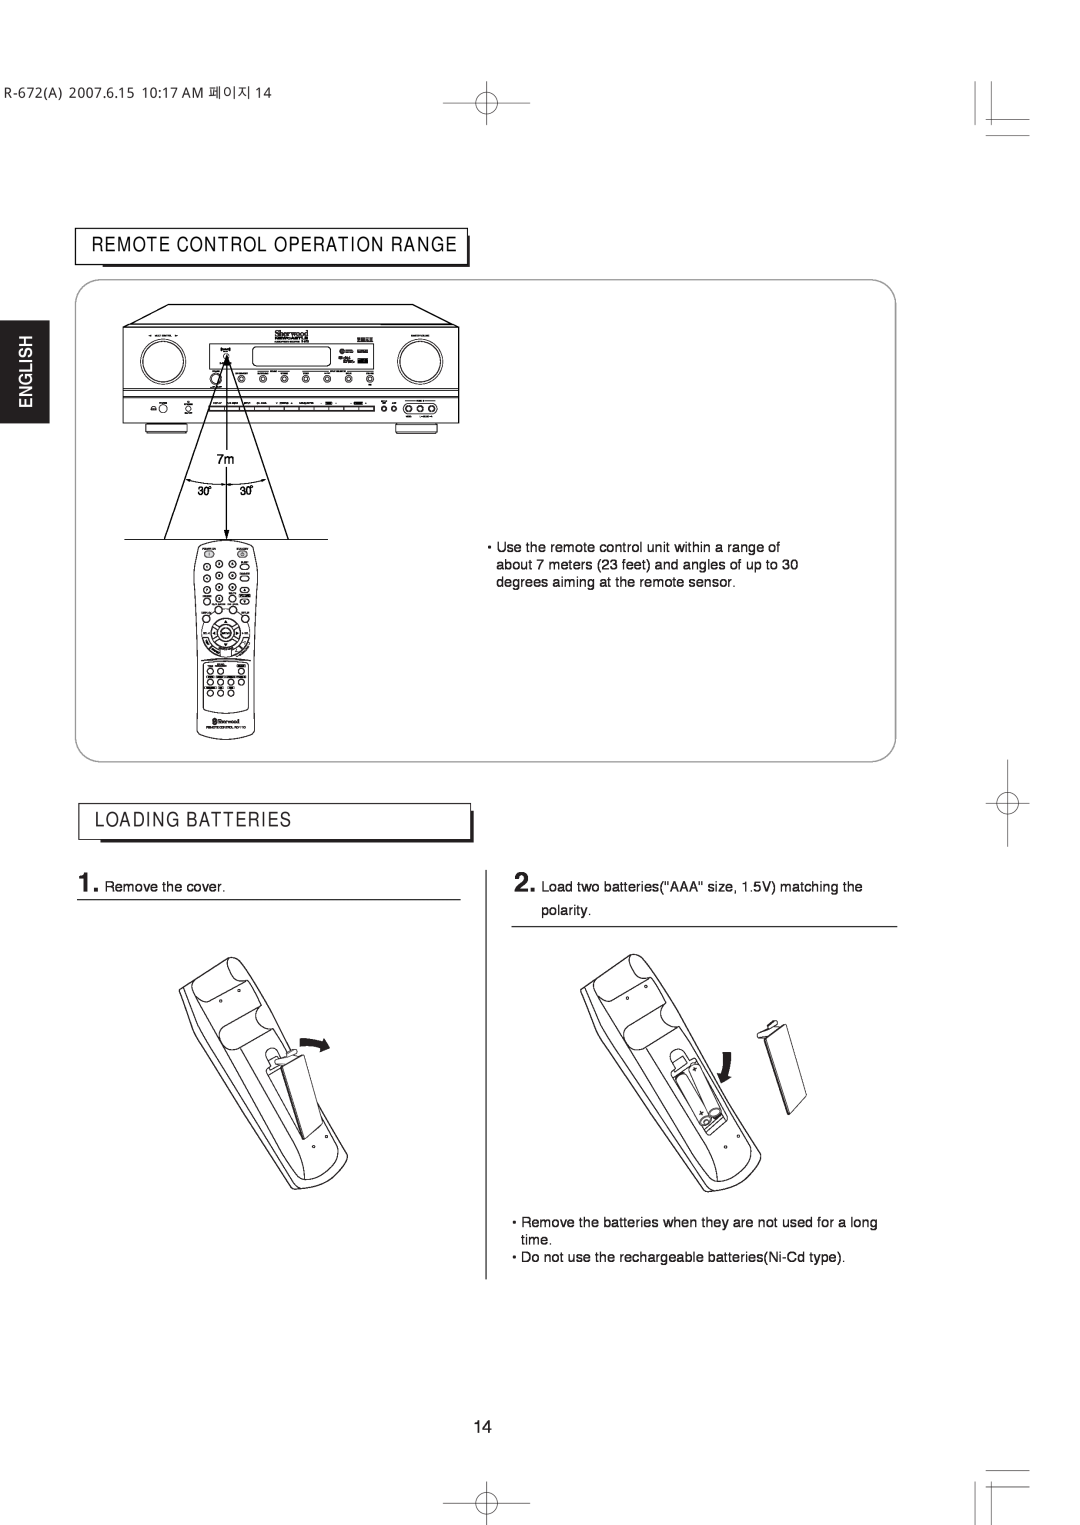 XM Satellite Radio manual Loading Batteries, Remote Control Operation Range, English, R-672A2007.6.15 10 17 AM 페이지 